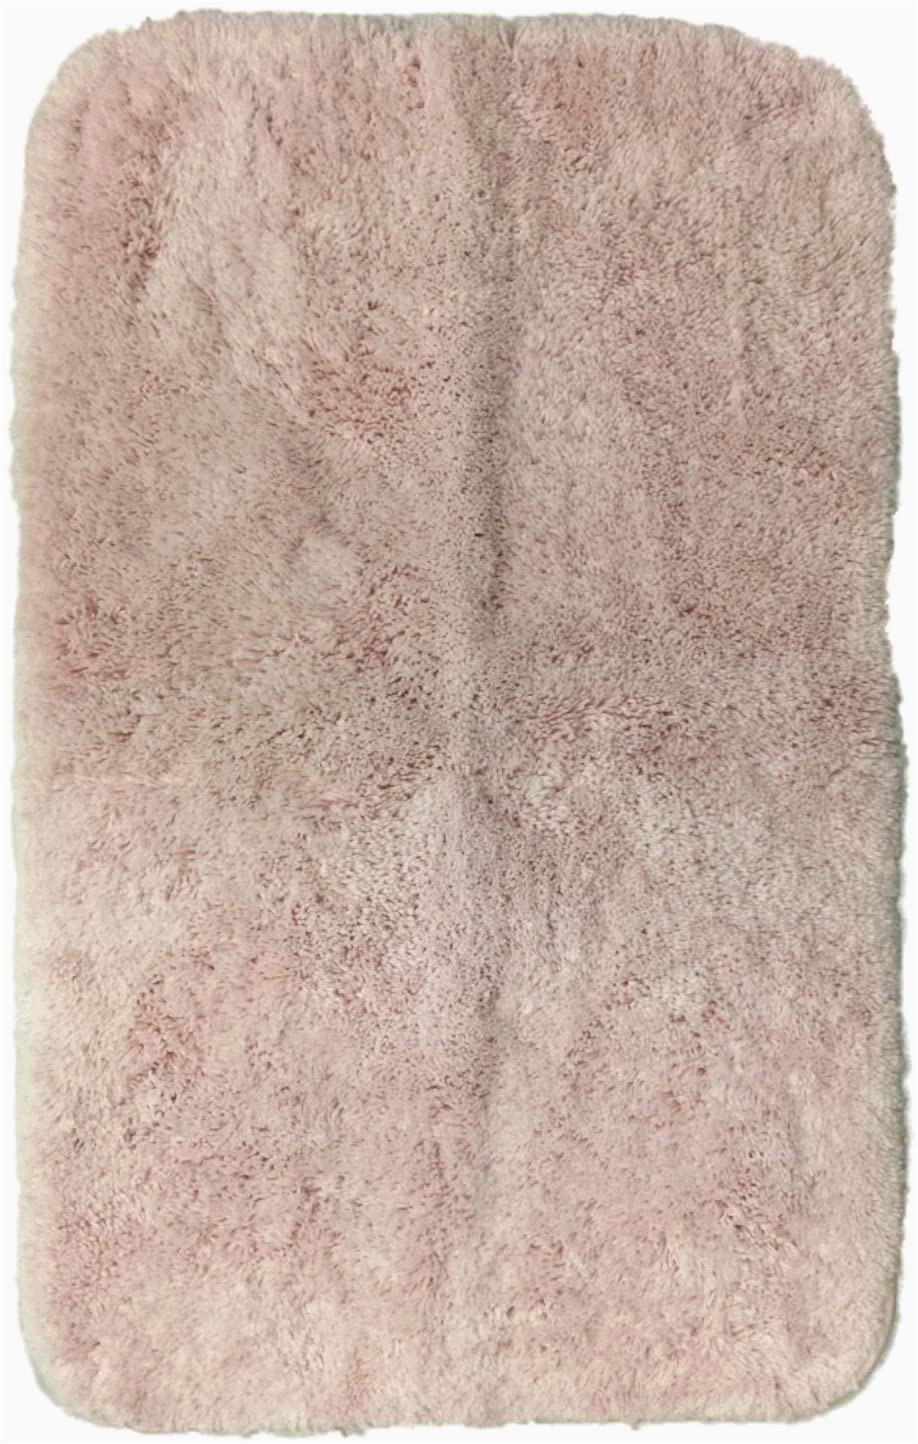 Sonoma Cotton Bath Rugs Amazon sonoma Ultimate Light Blush Pink Skid Resistant